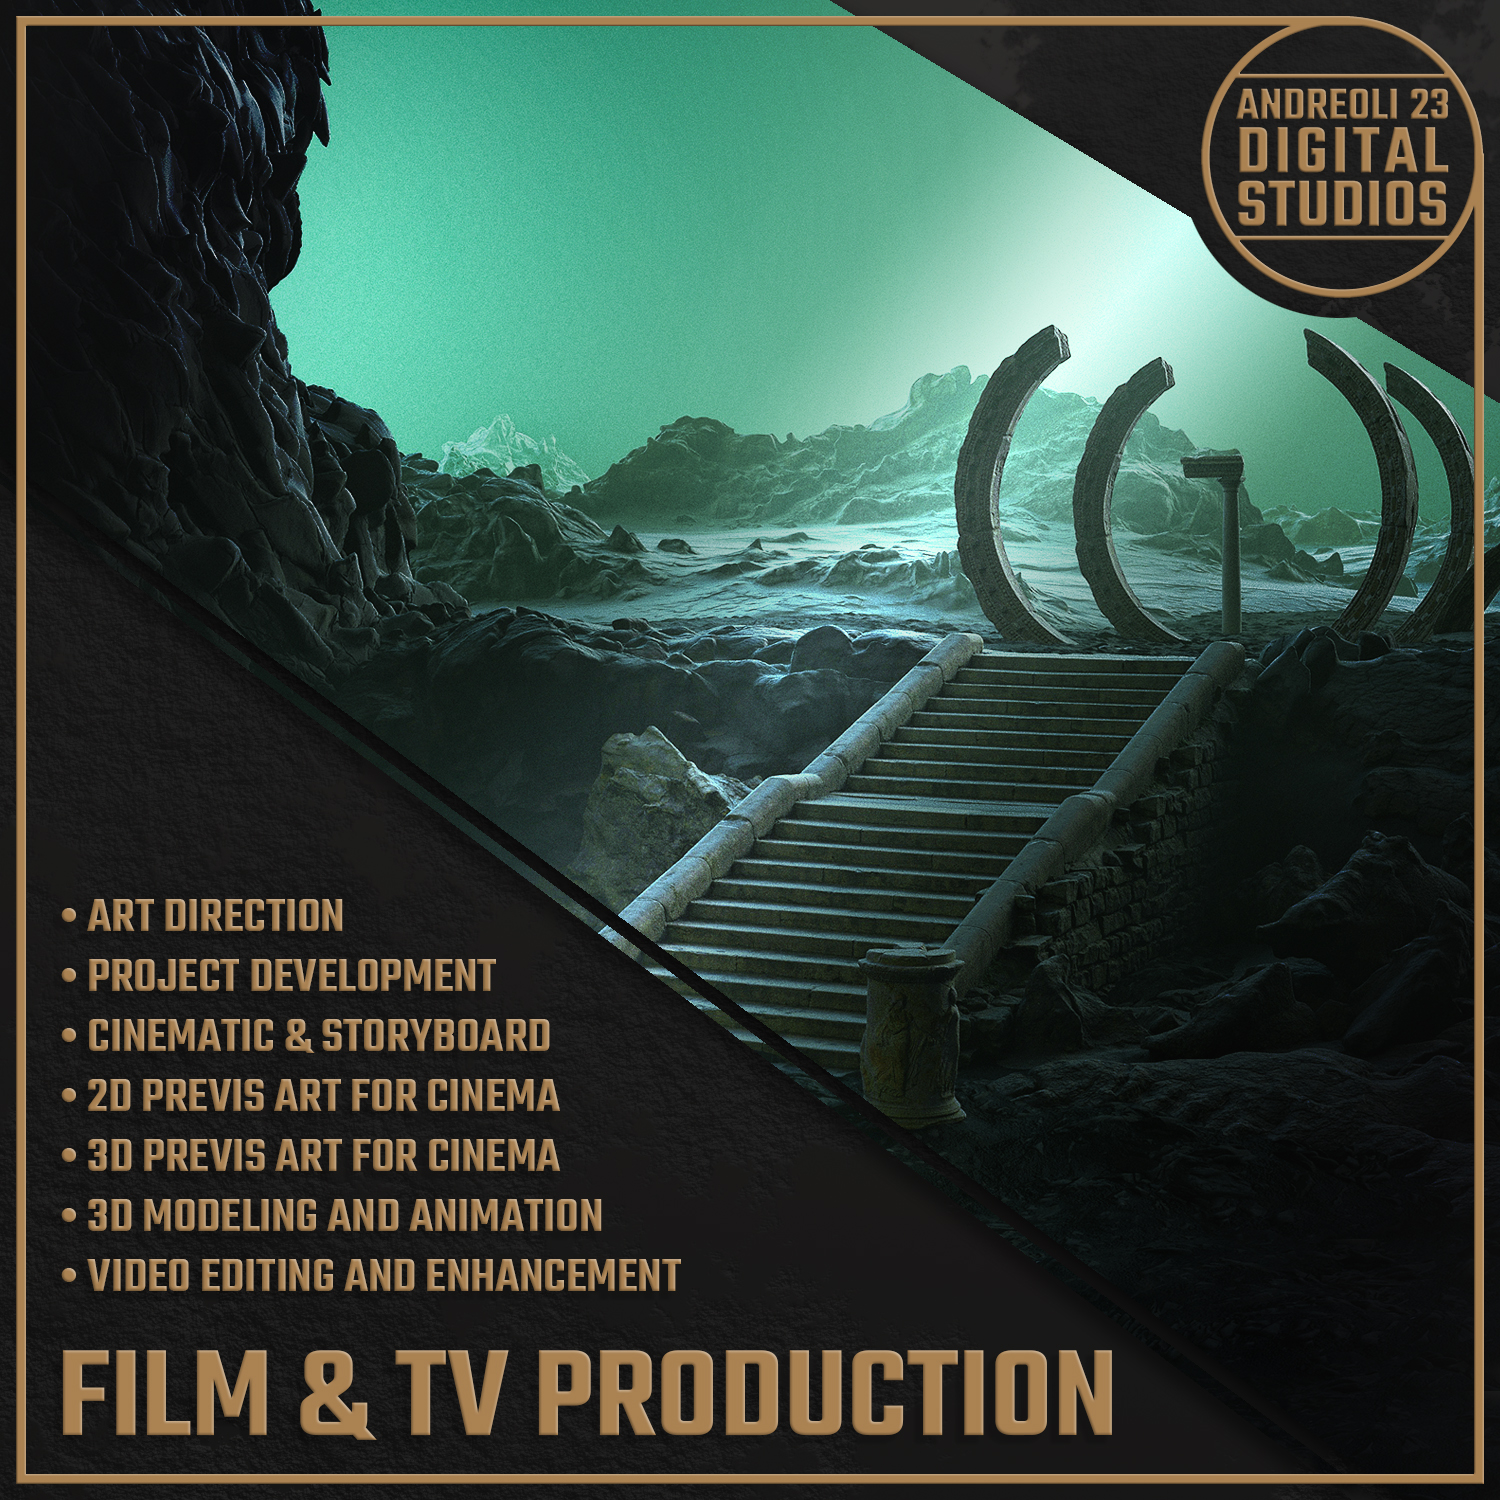 FILM & TV PRODUCTION